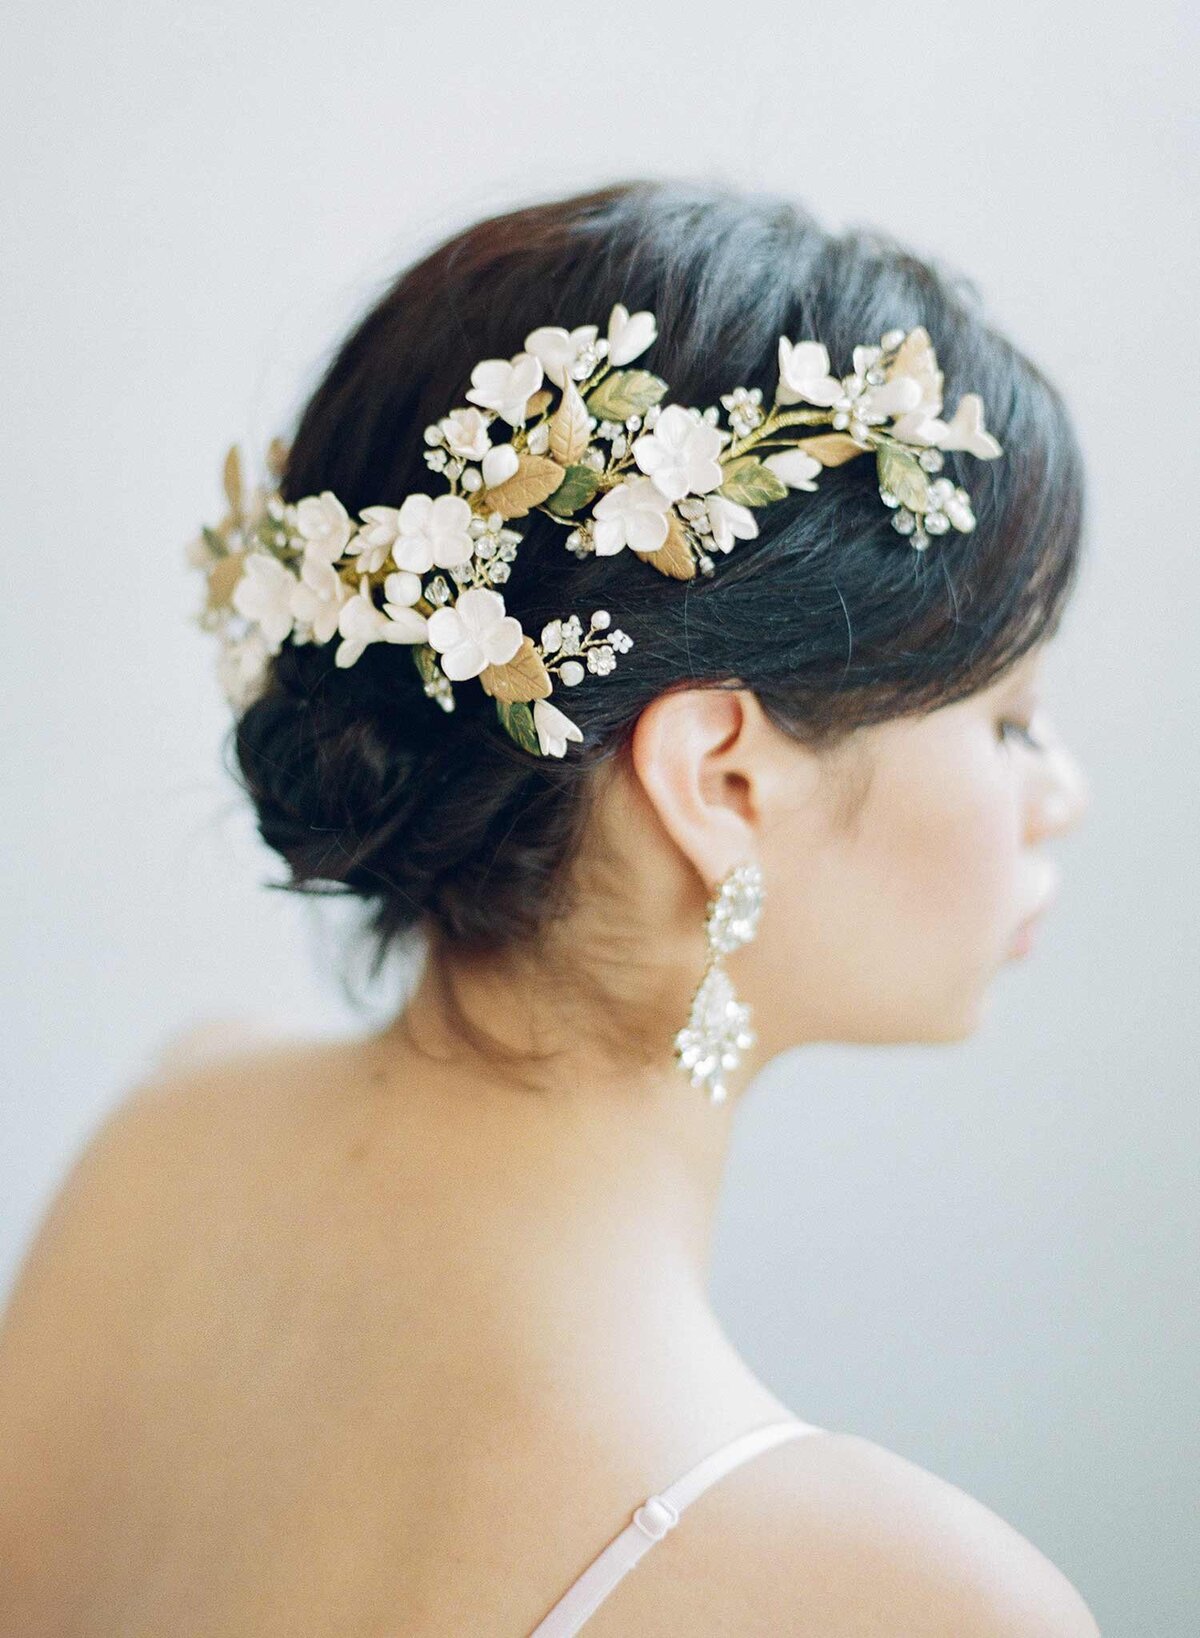 827c-bridal-flower-hair-comb-accessory-twigs-_-honey-MAIN-CROP